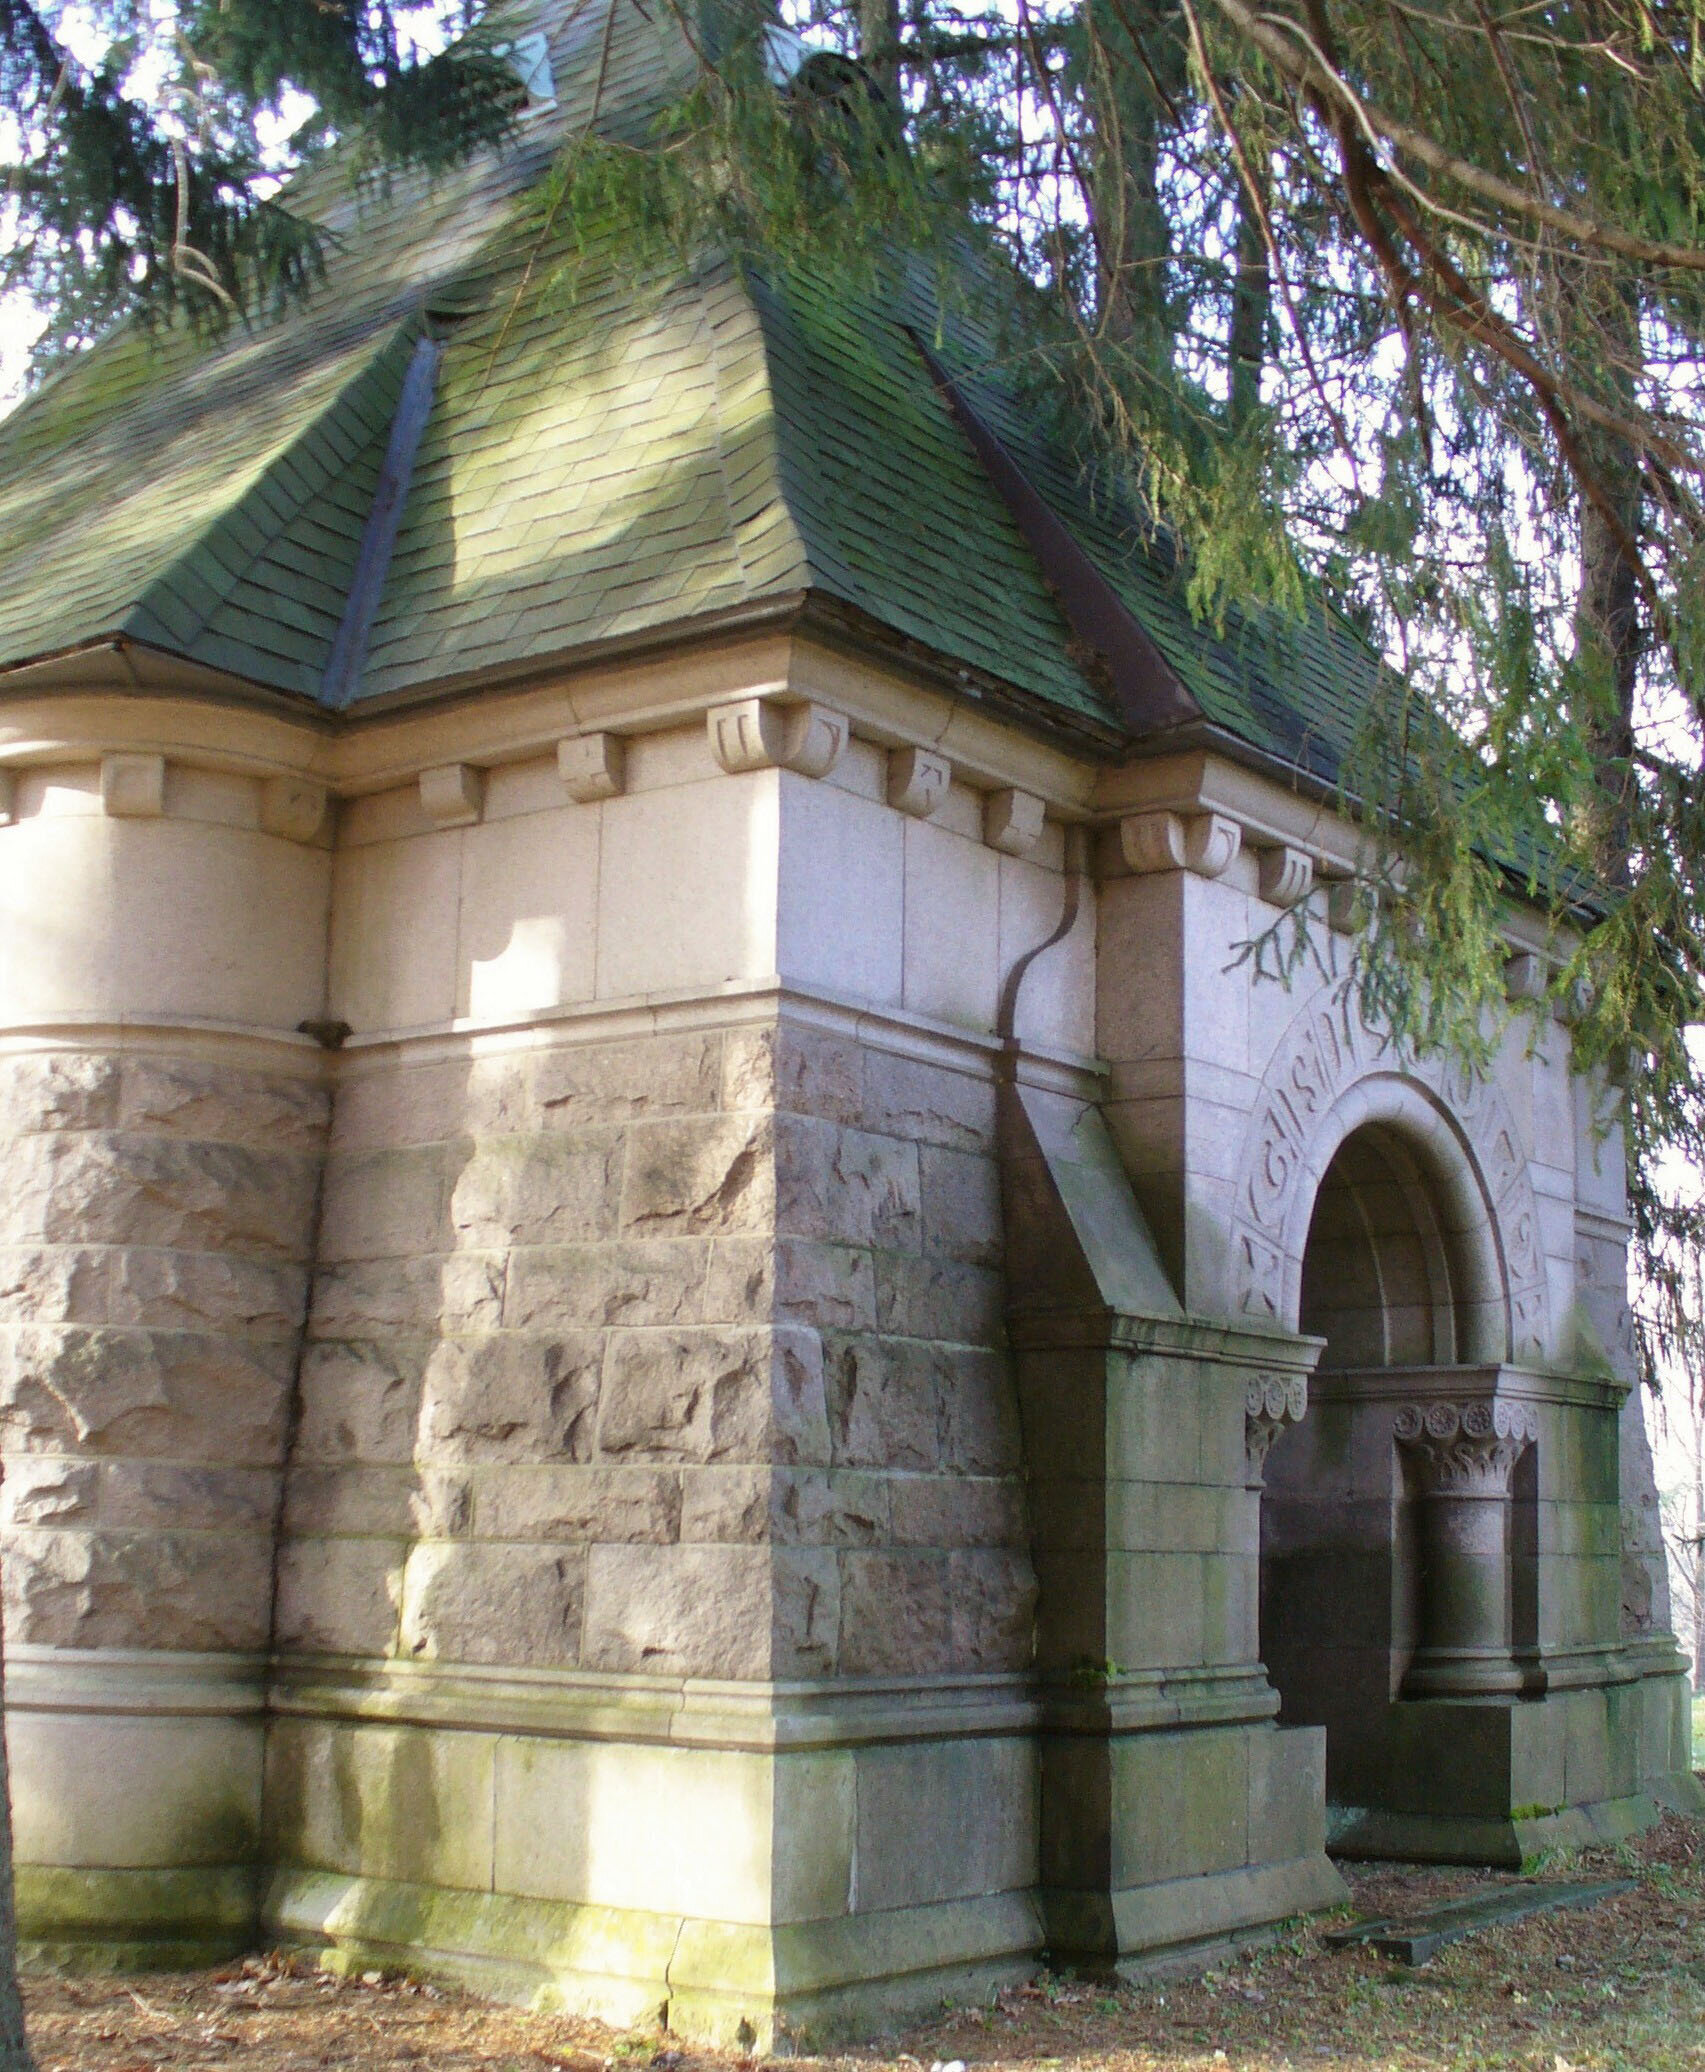 The Griswold Mausoleum